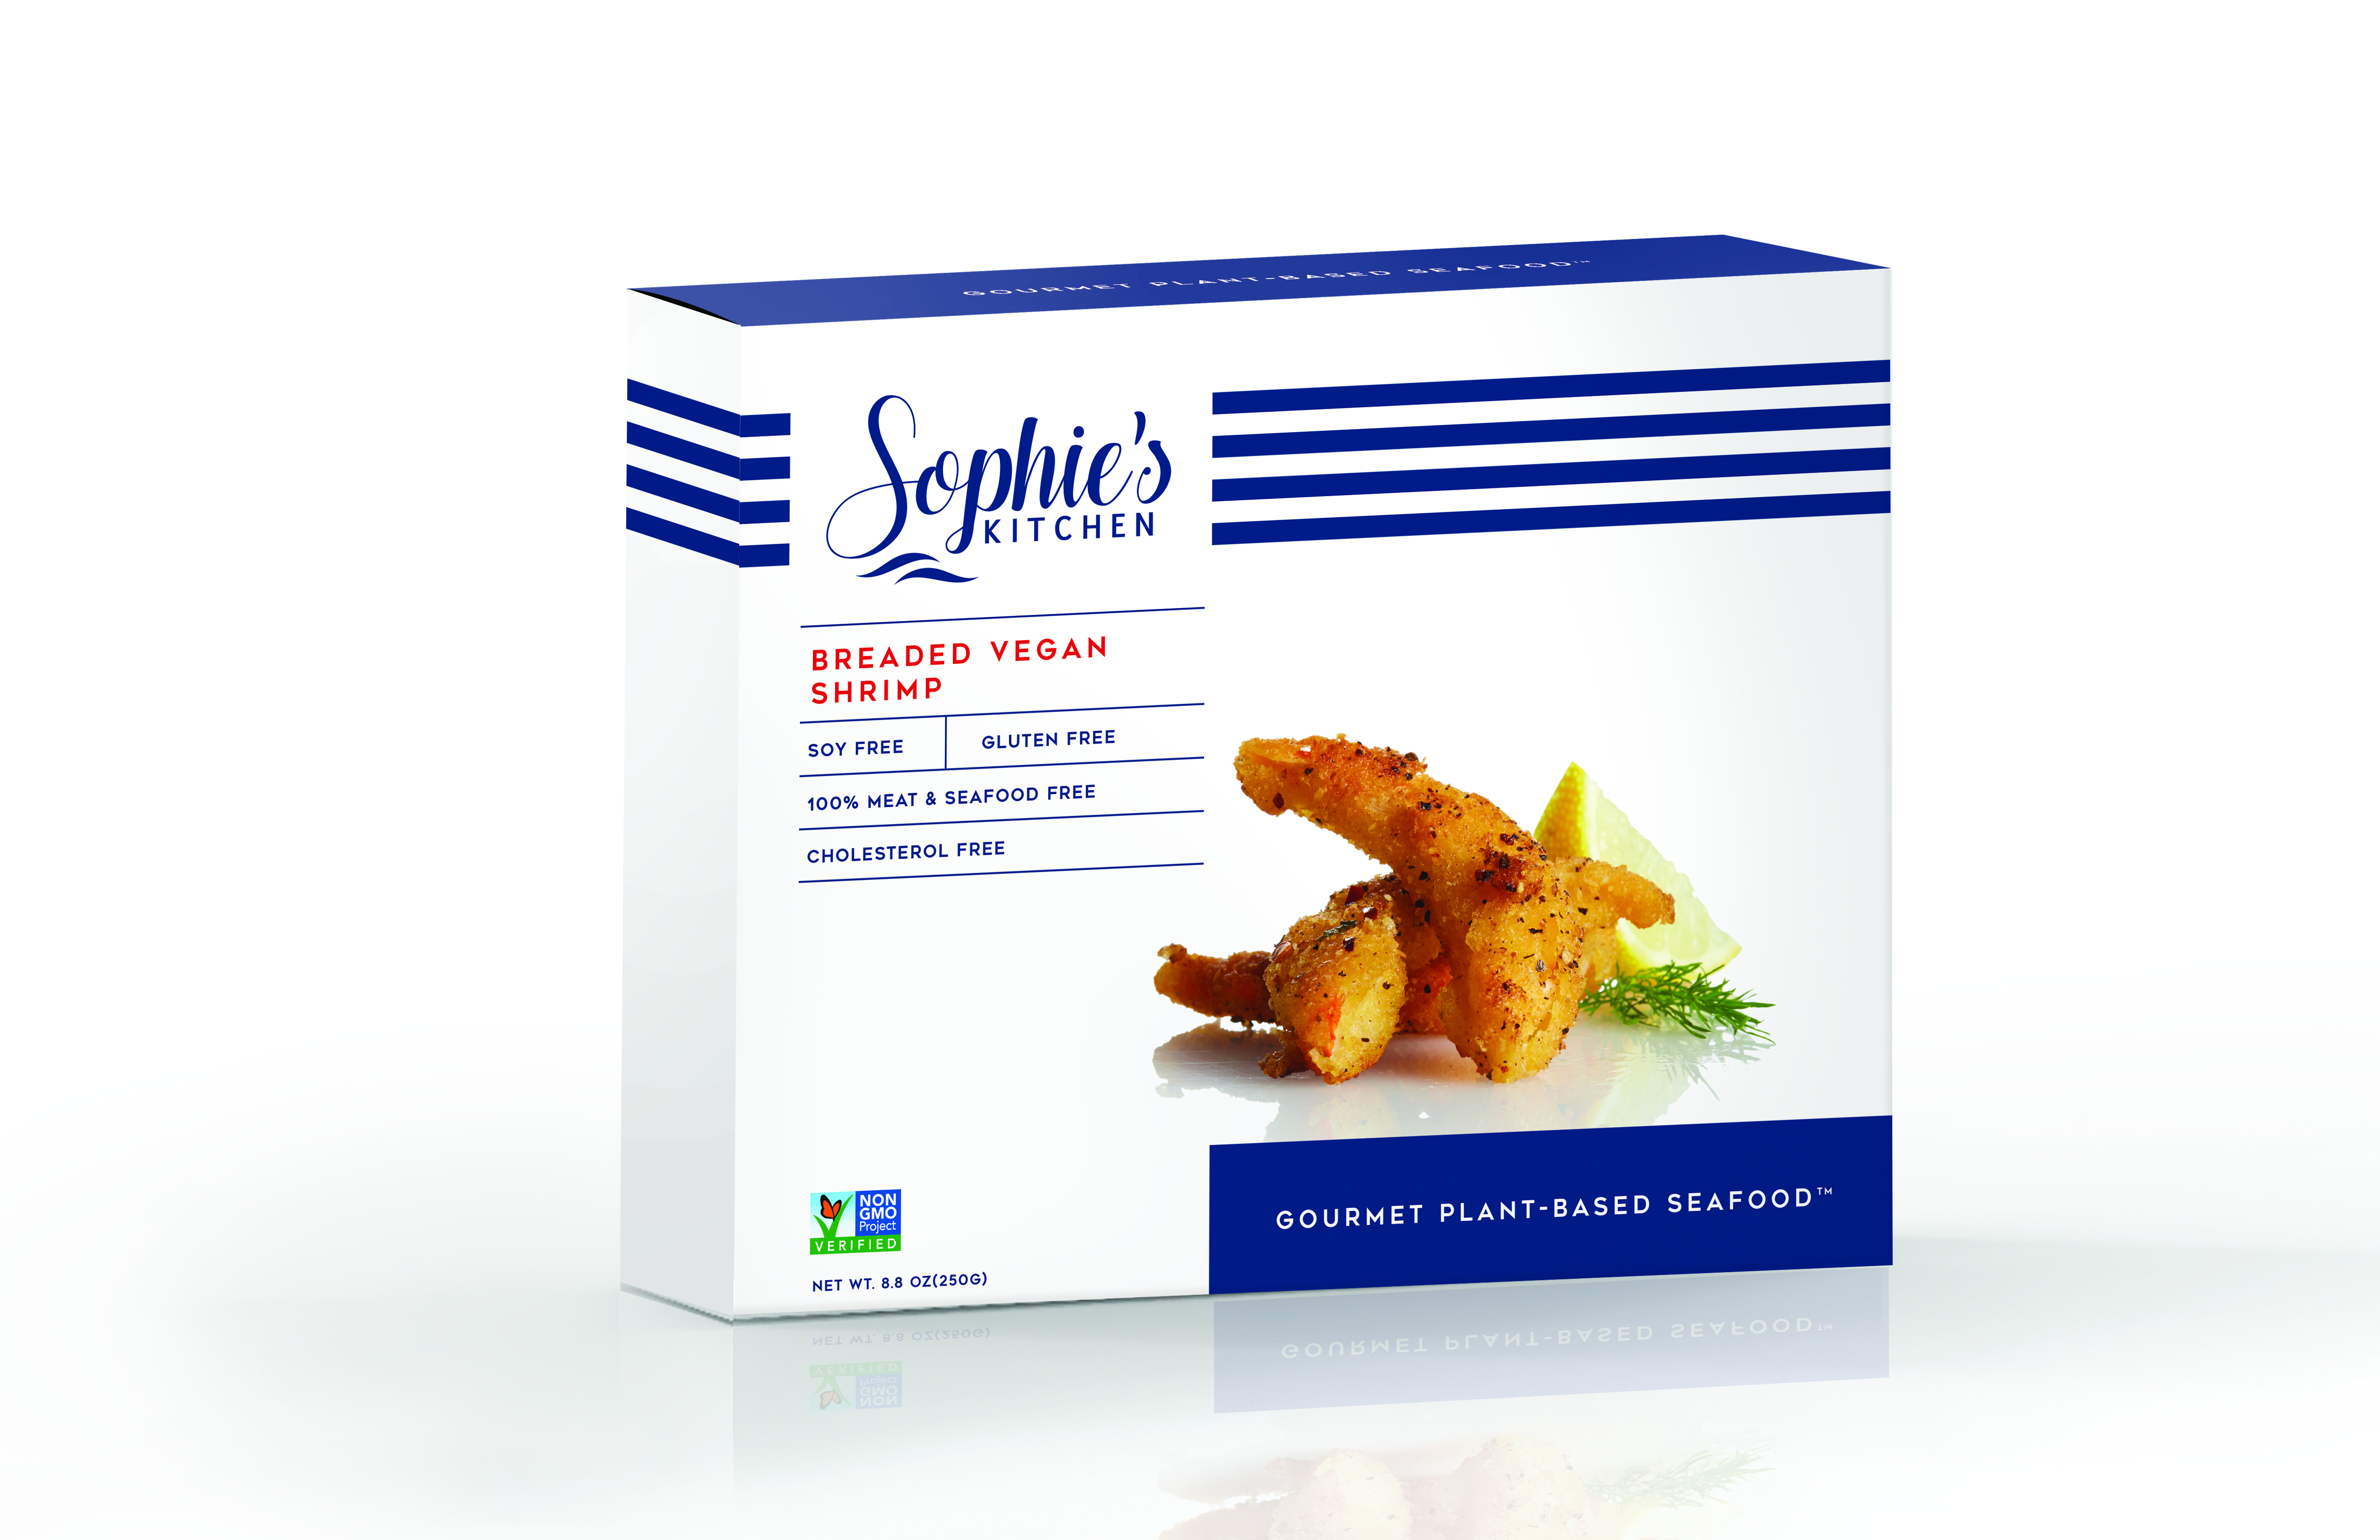 Sophie's Kitchen Vegan Breaded Shrimp - image 1 of 2